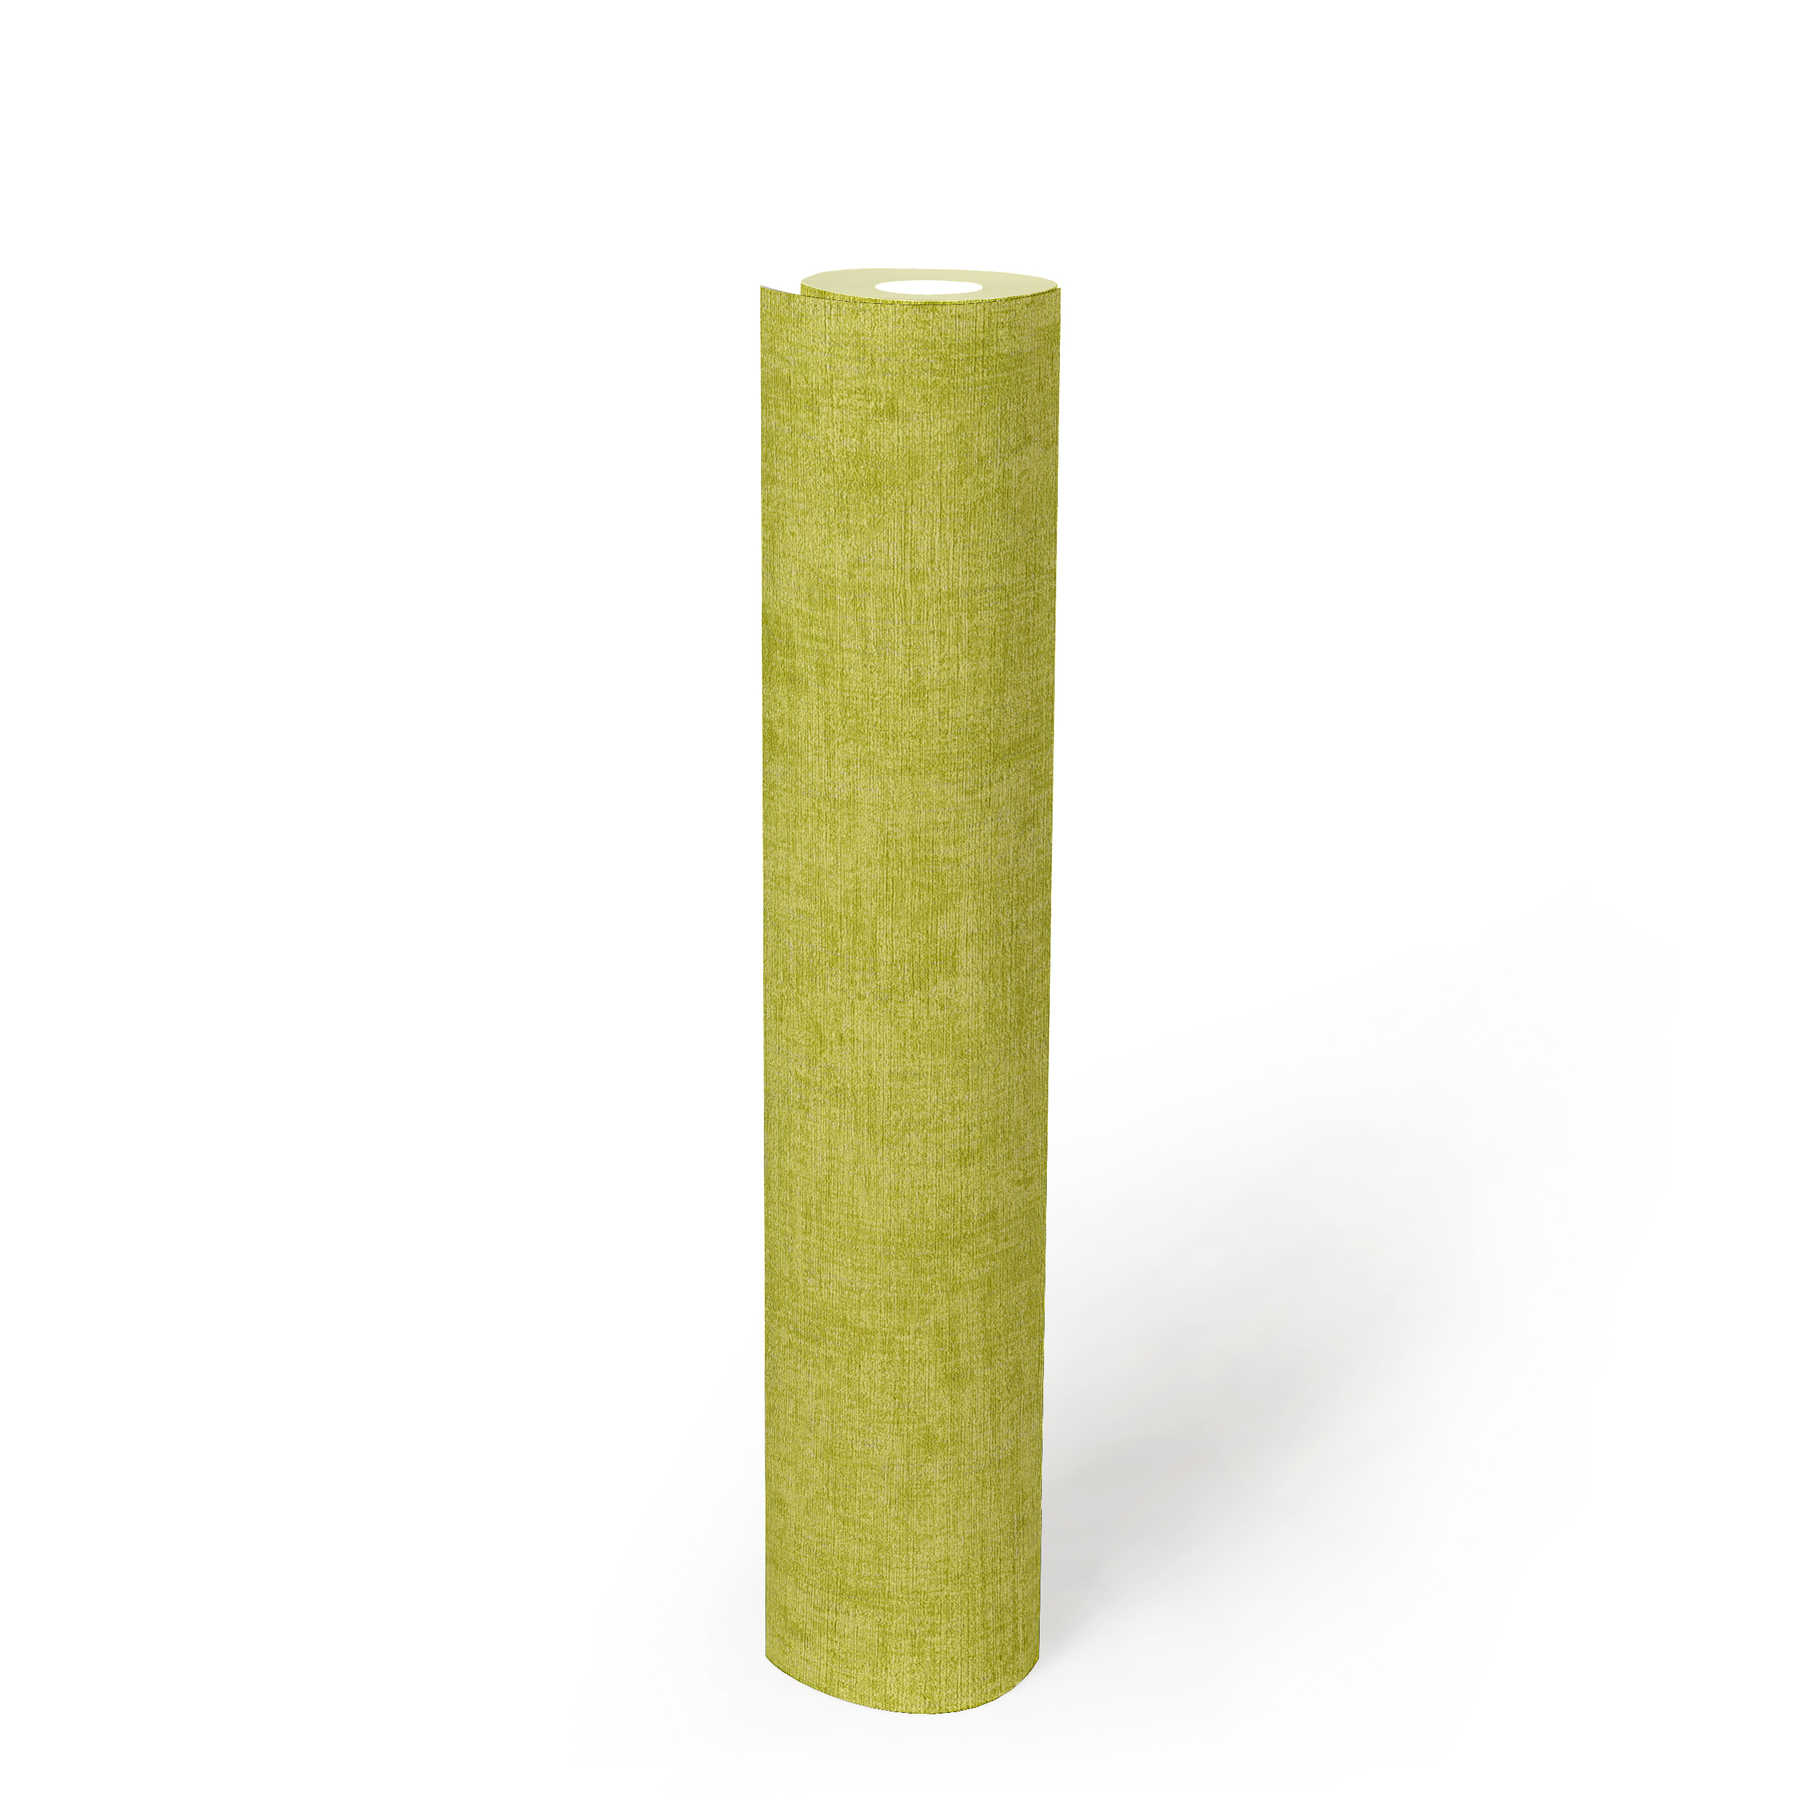             Papier peint chiné vert tilleul avec motif naturel gaufré
        